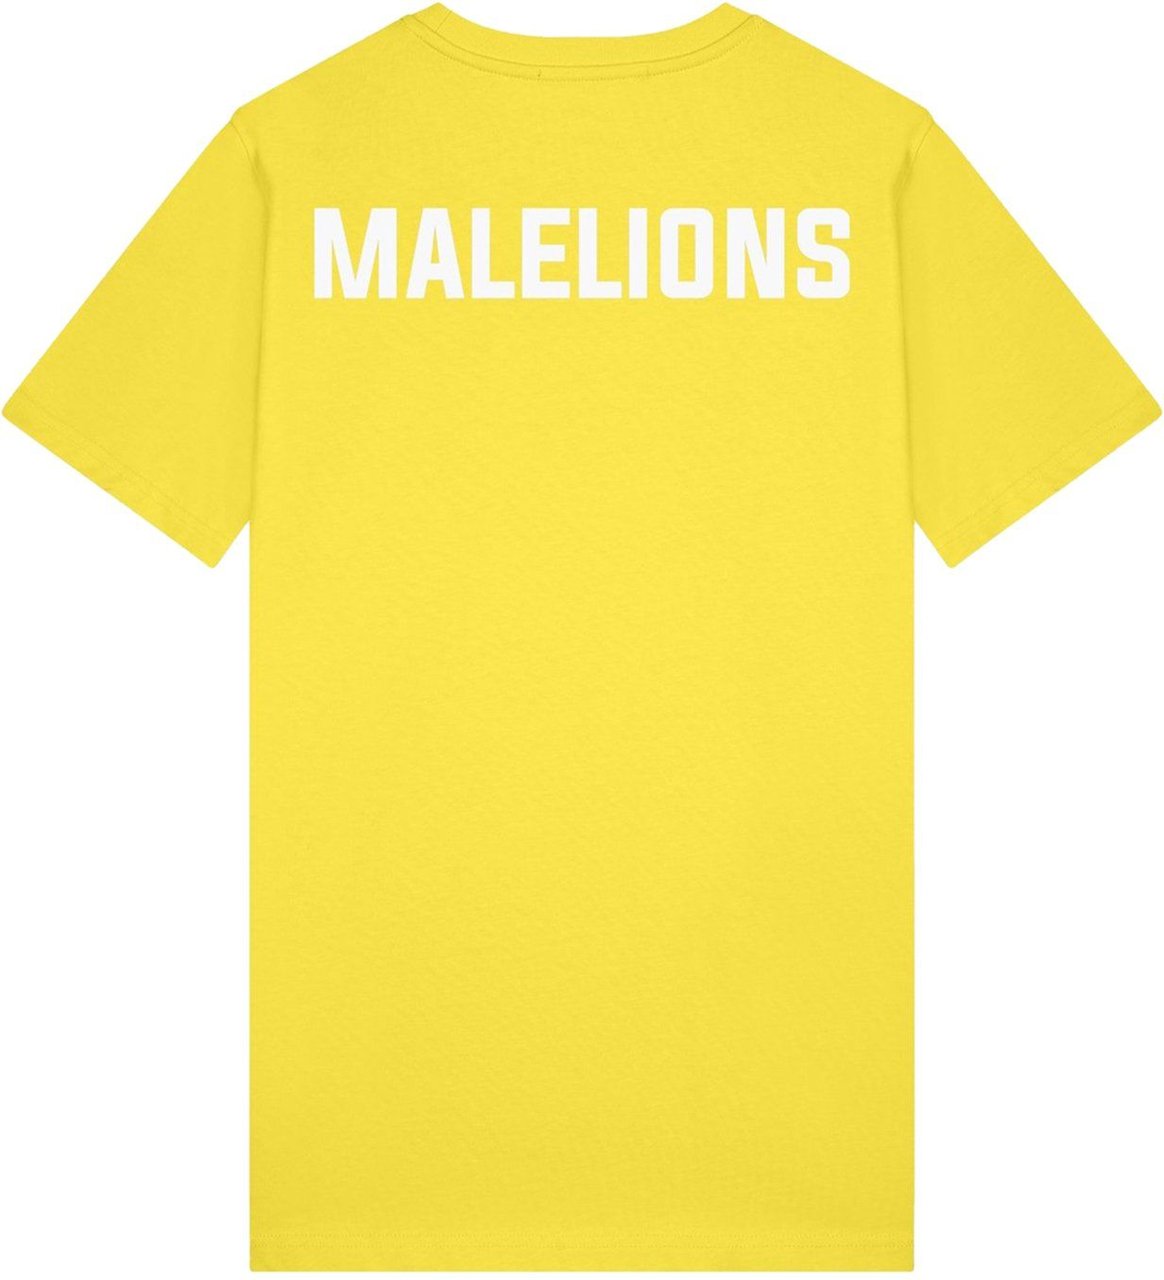 Malelions Logo T-Shirt 2 - Yellow Geel